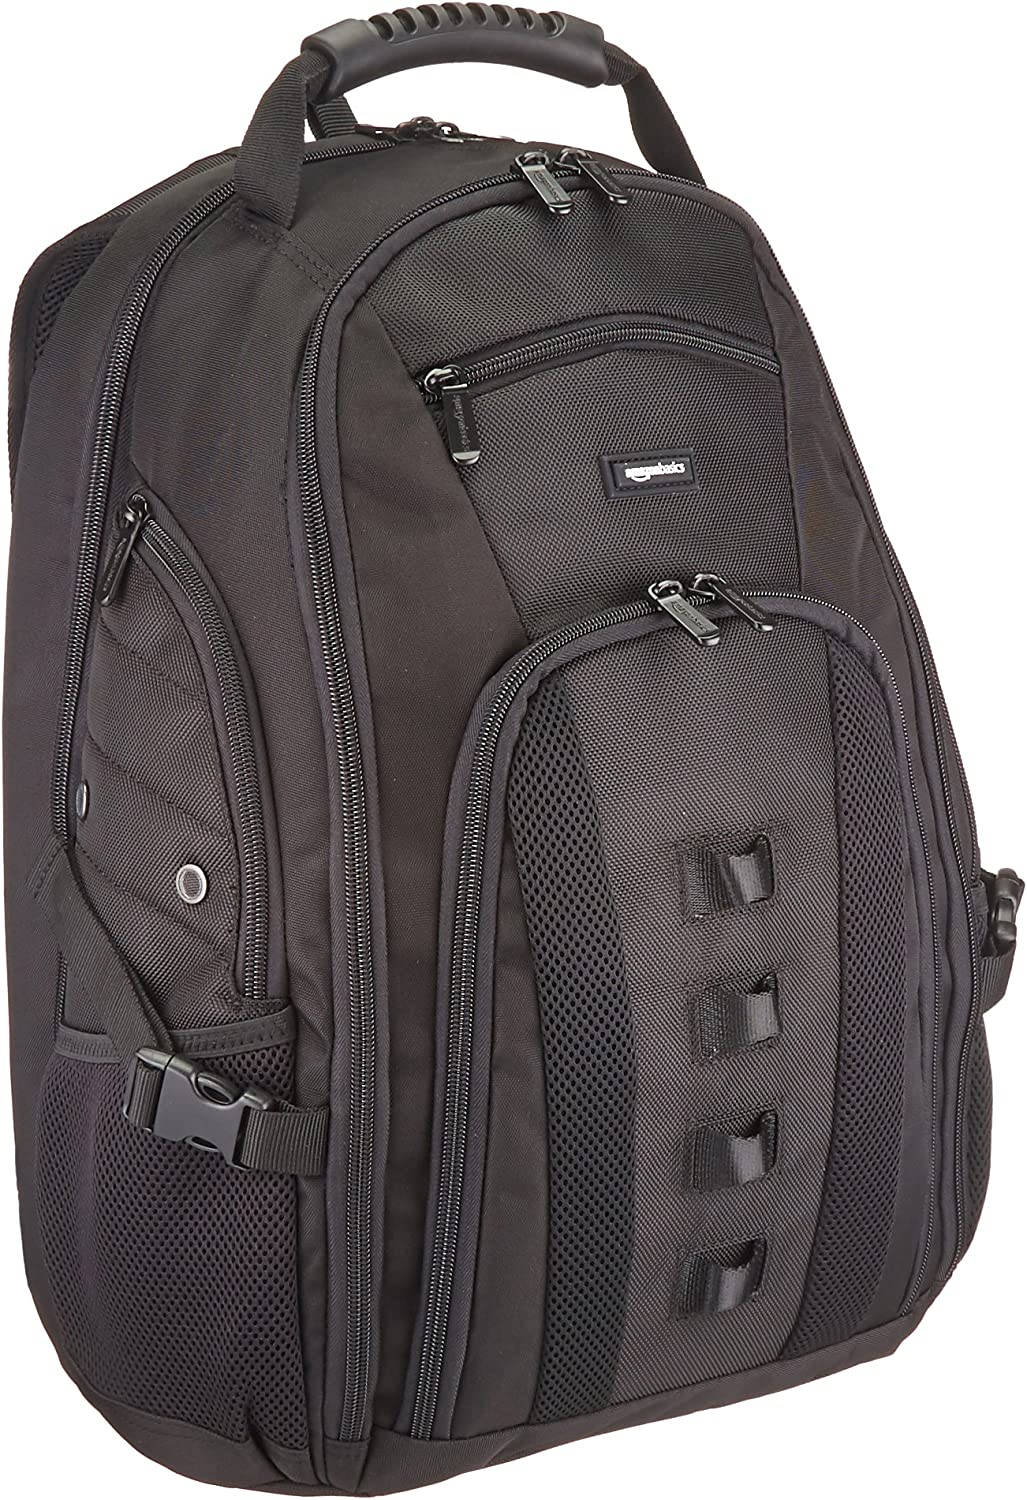 Travel 17. Рюкзак адвентуре. Рюкзак Adventure Outlet. Nikon veacss66 рюкзак. Adventure Backpack.